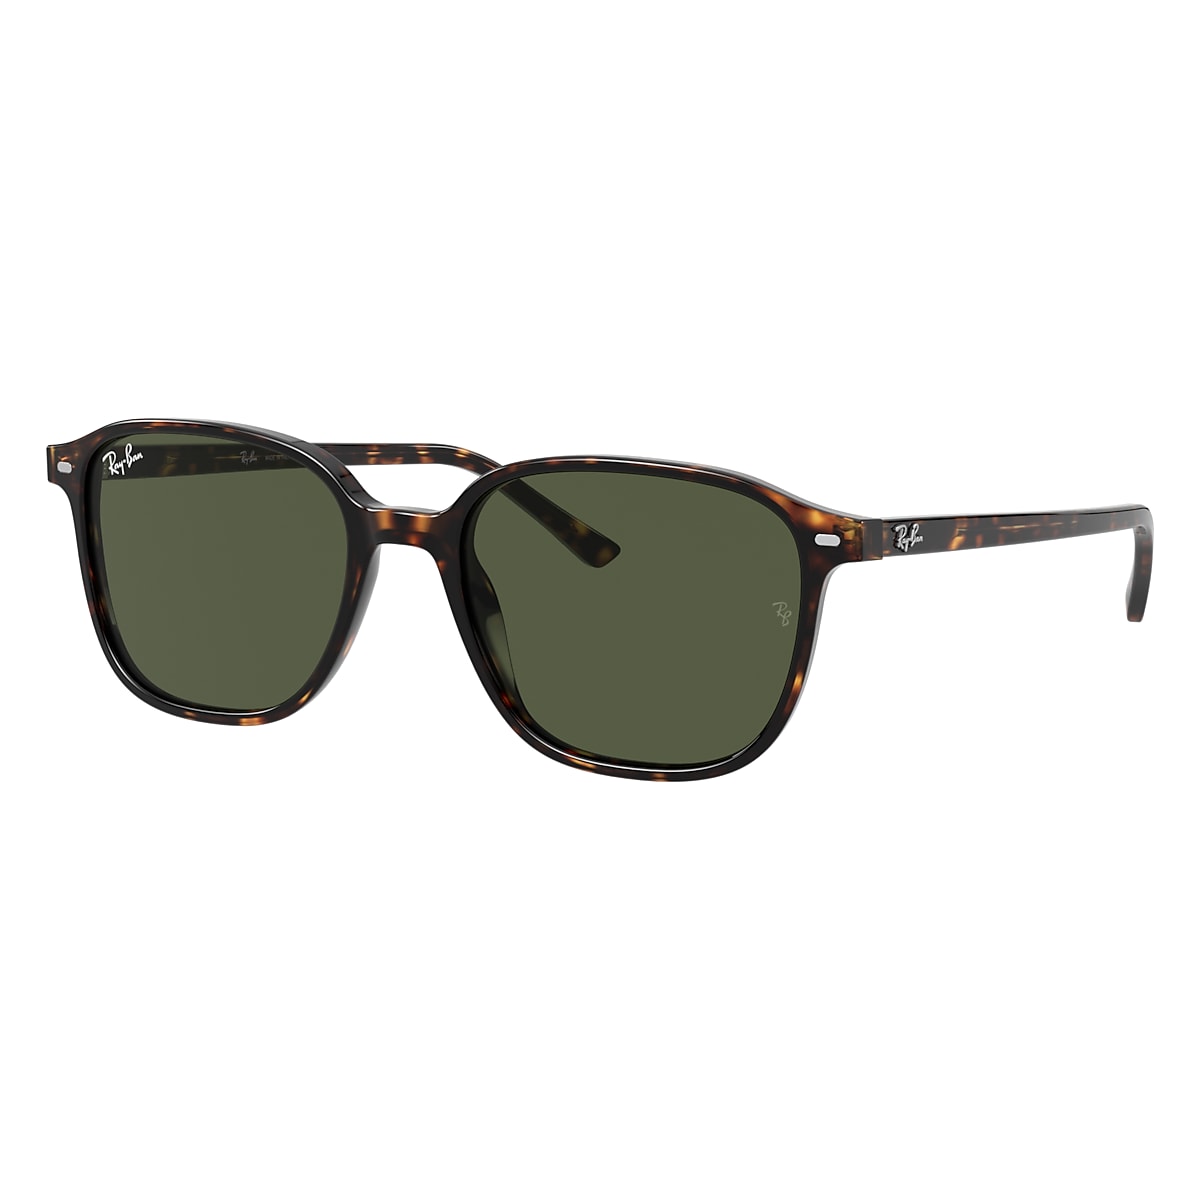 LEONARD Sunglasses in Tortoise and Green - RB2193 | Ray-Ban 